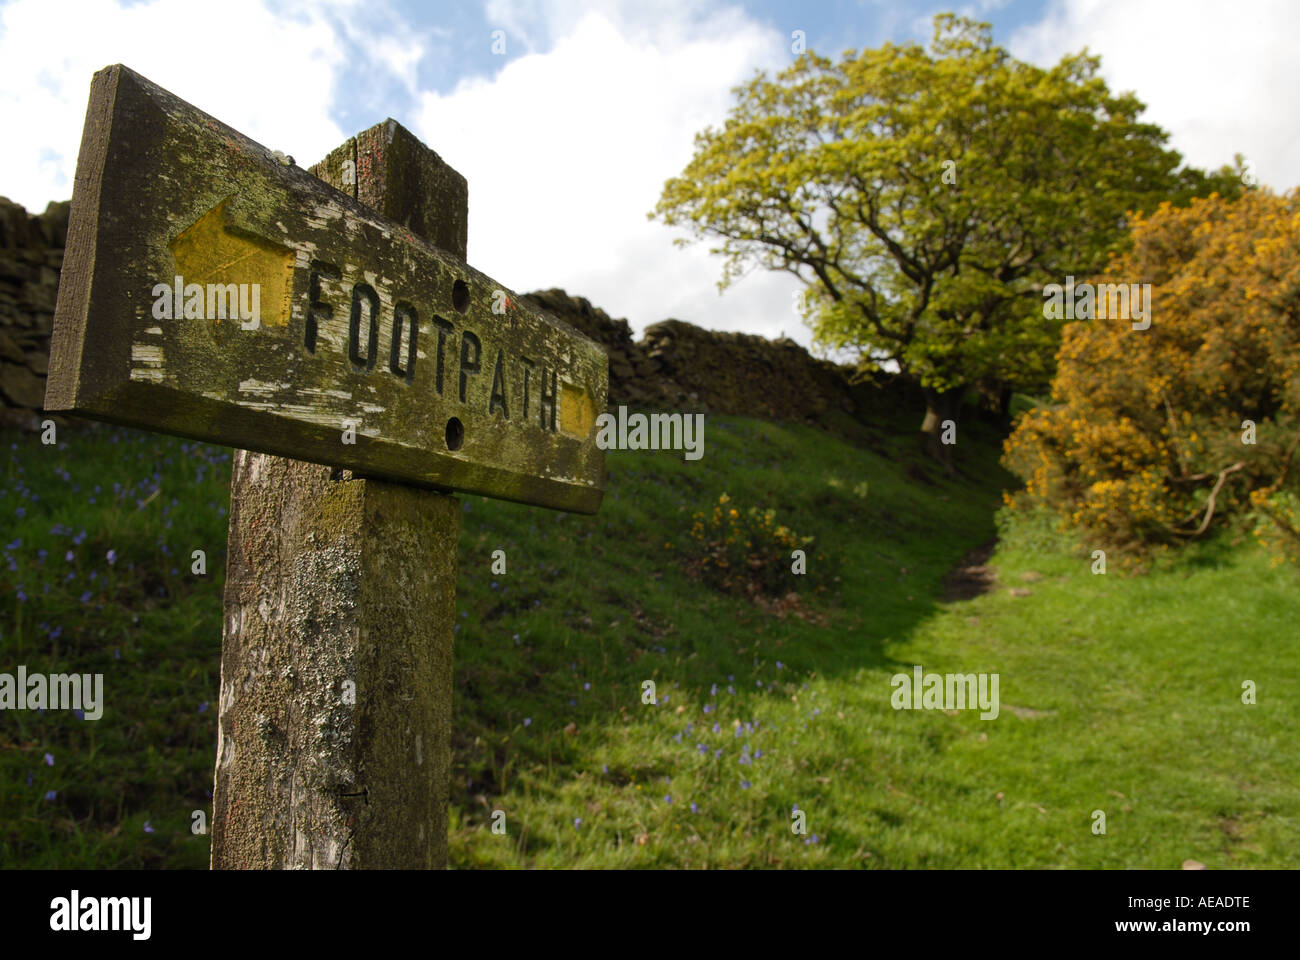 Footpath sign on National Trust property near Ladybower, Peak District. Stock Photo